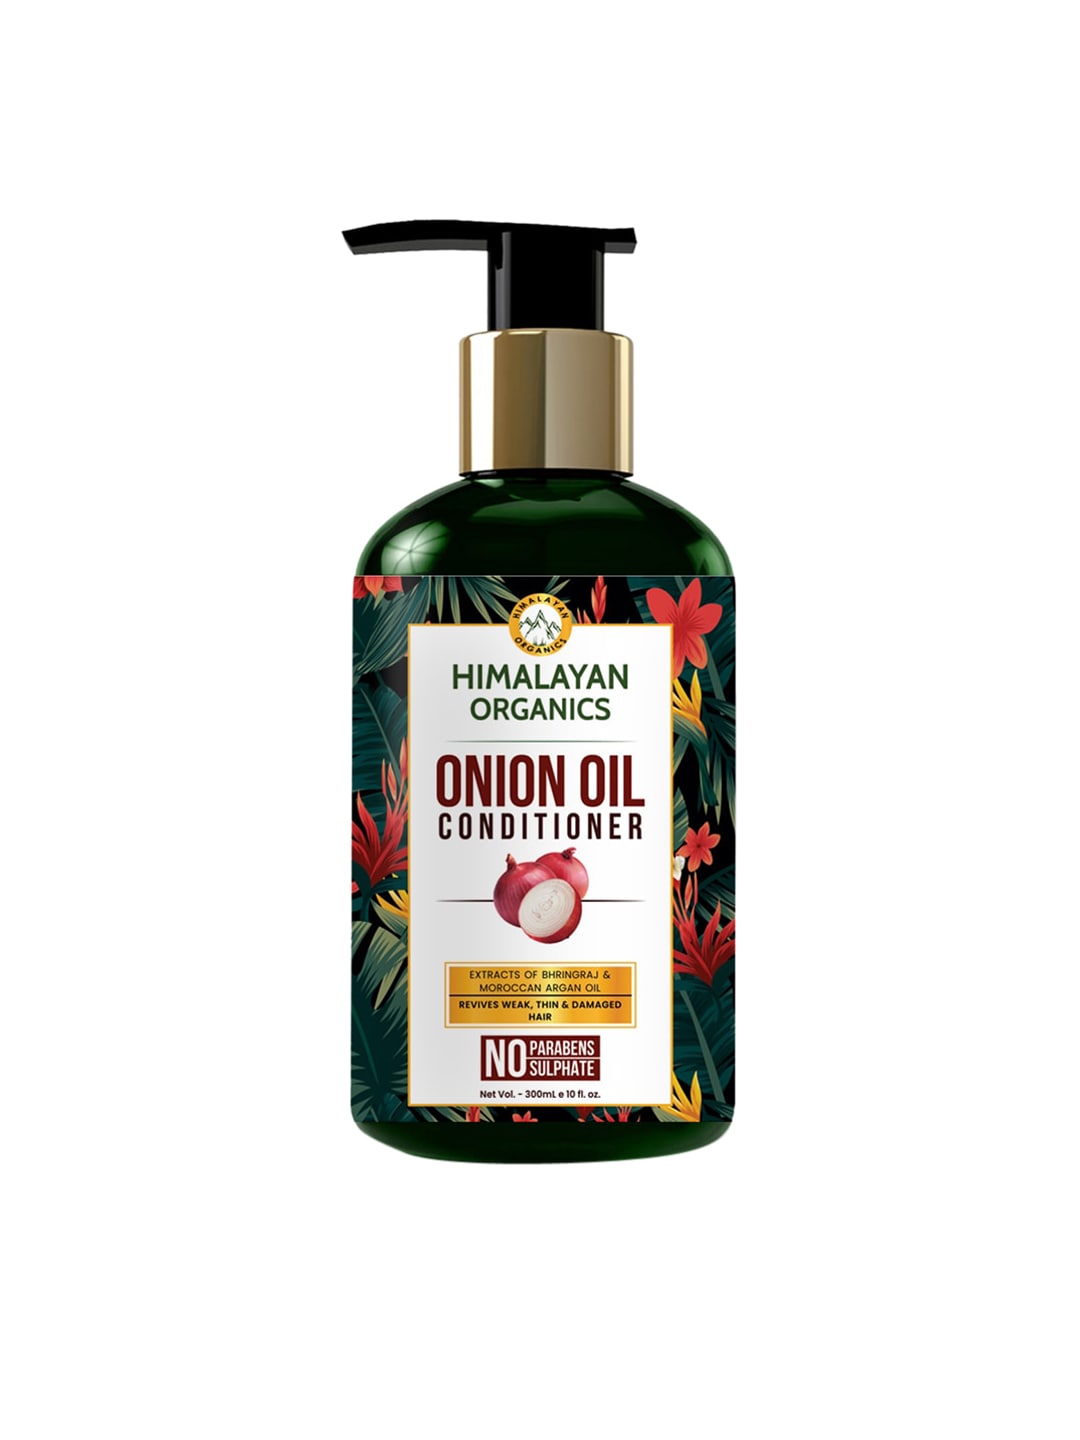 Himalayan Organics Onion Oil Conditioner 300 ml Price in India